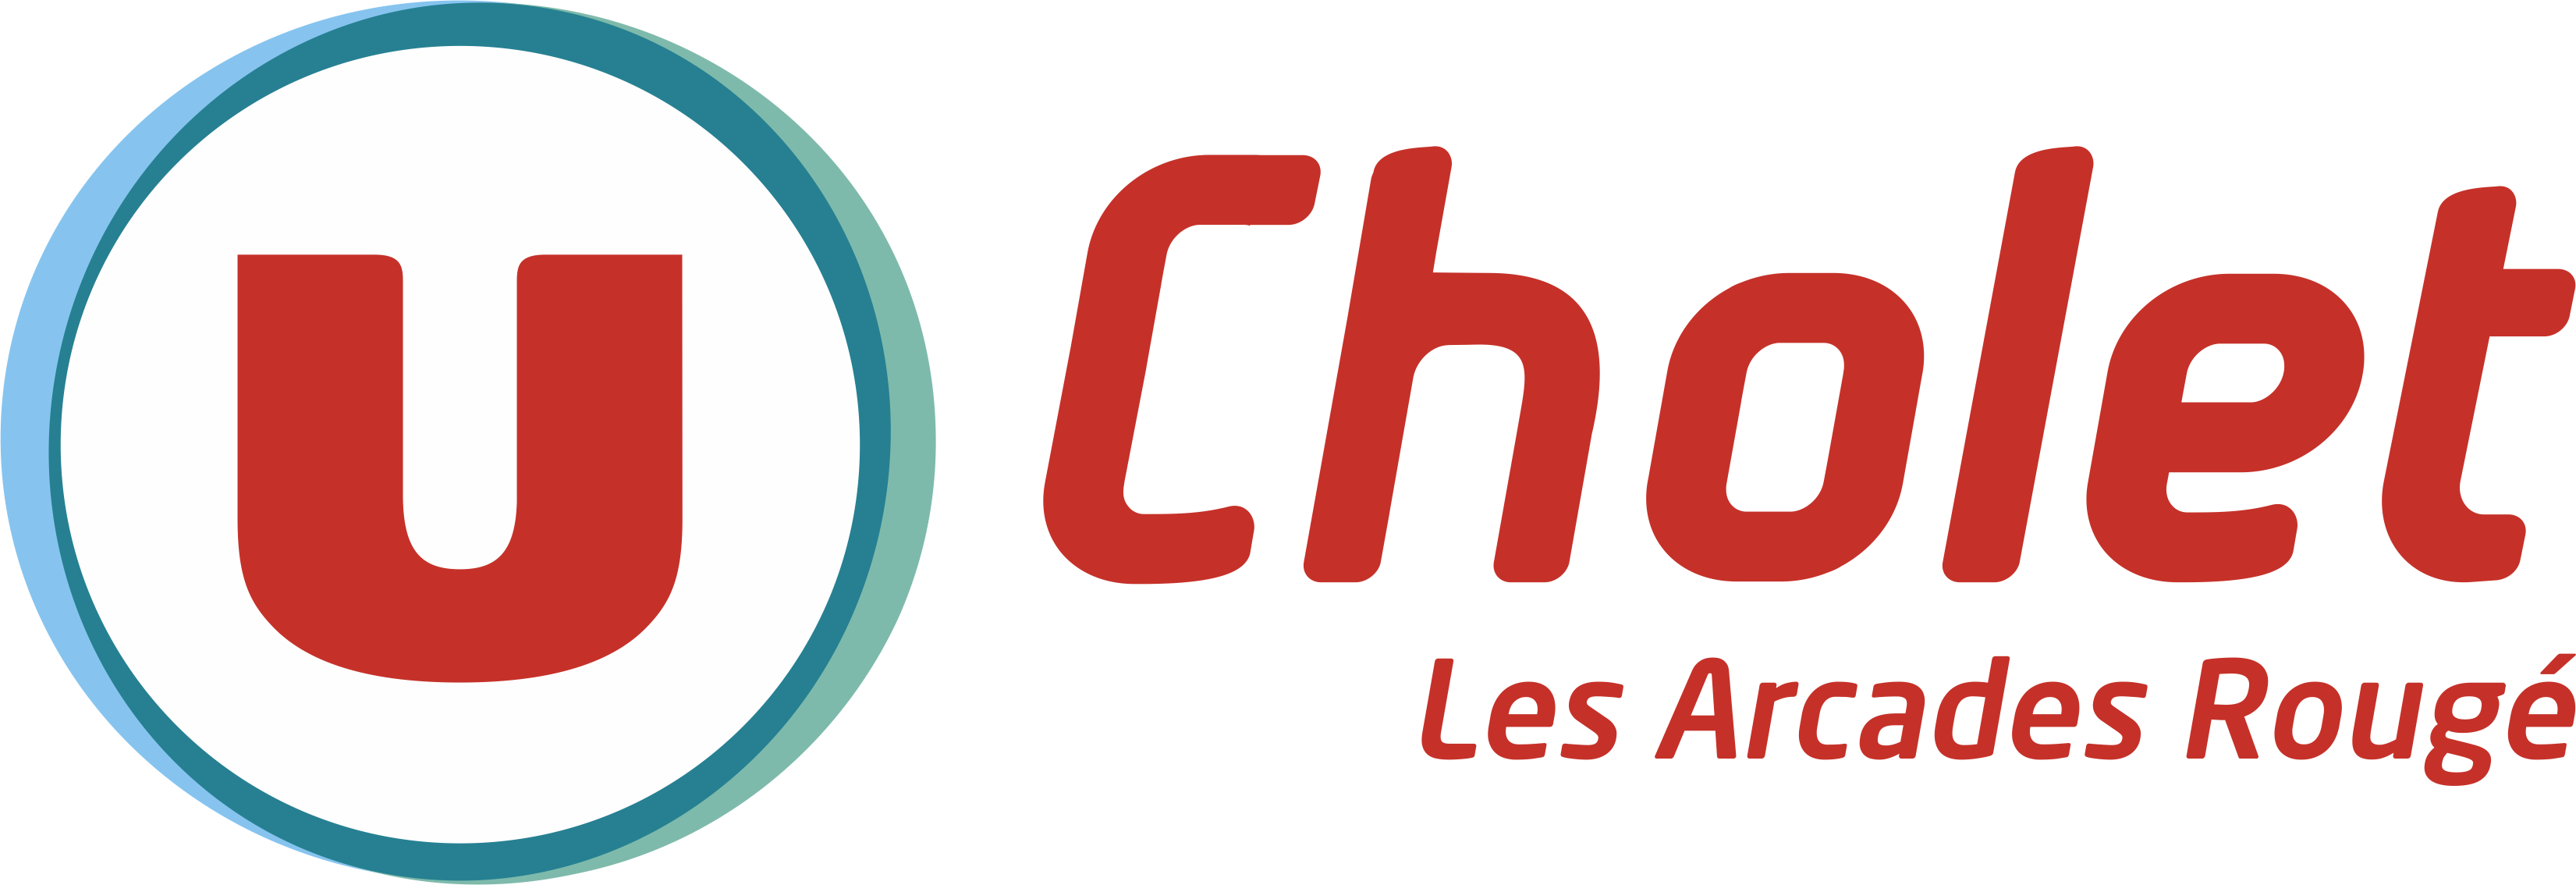 logo U Cholet